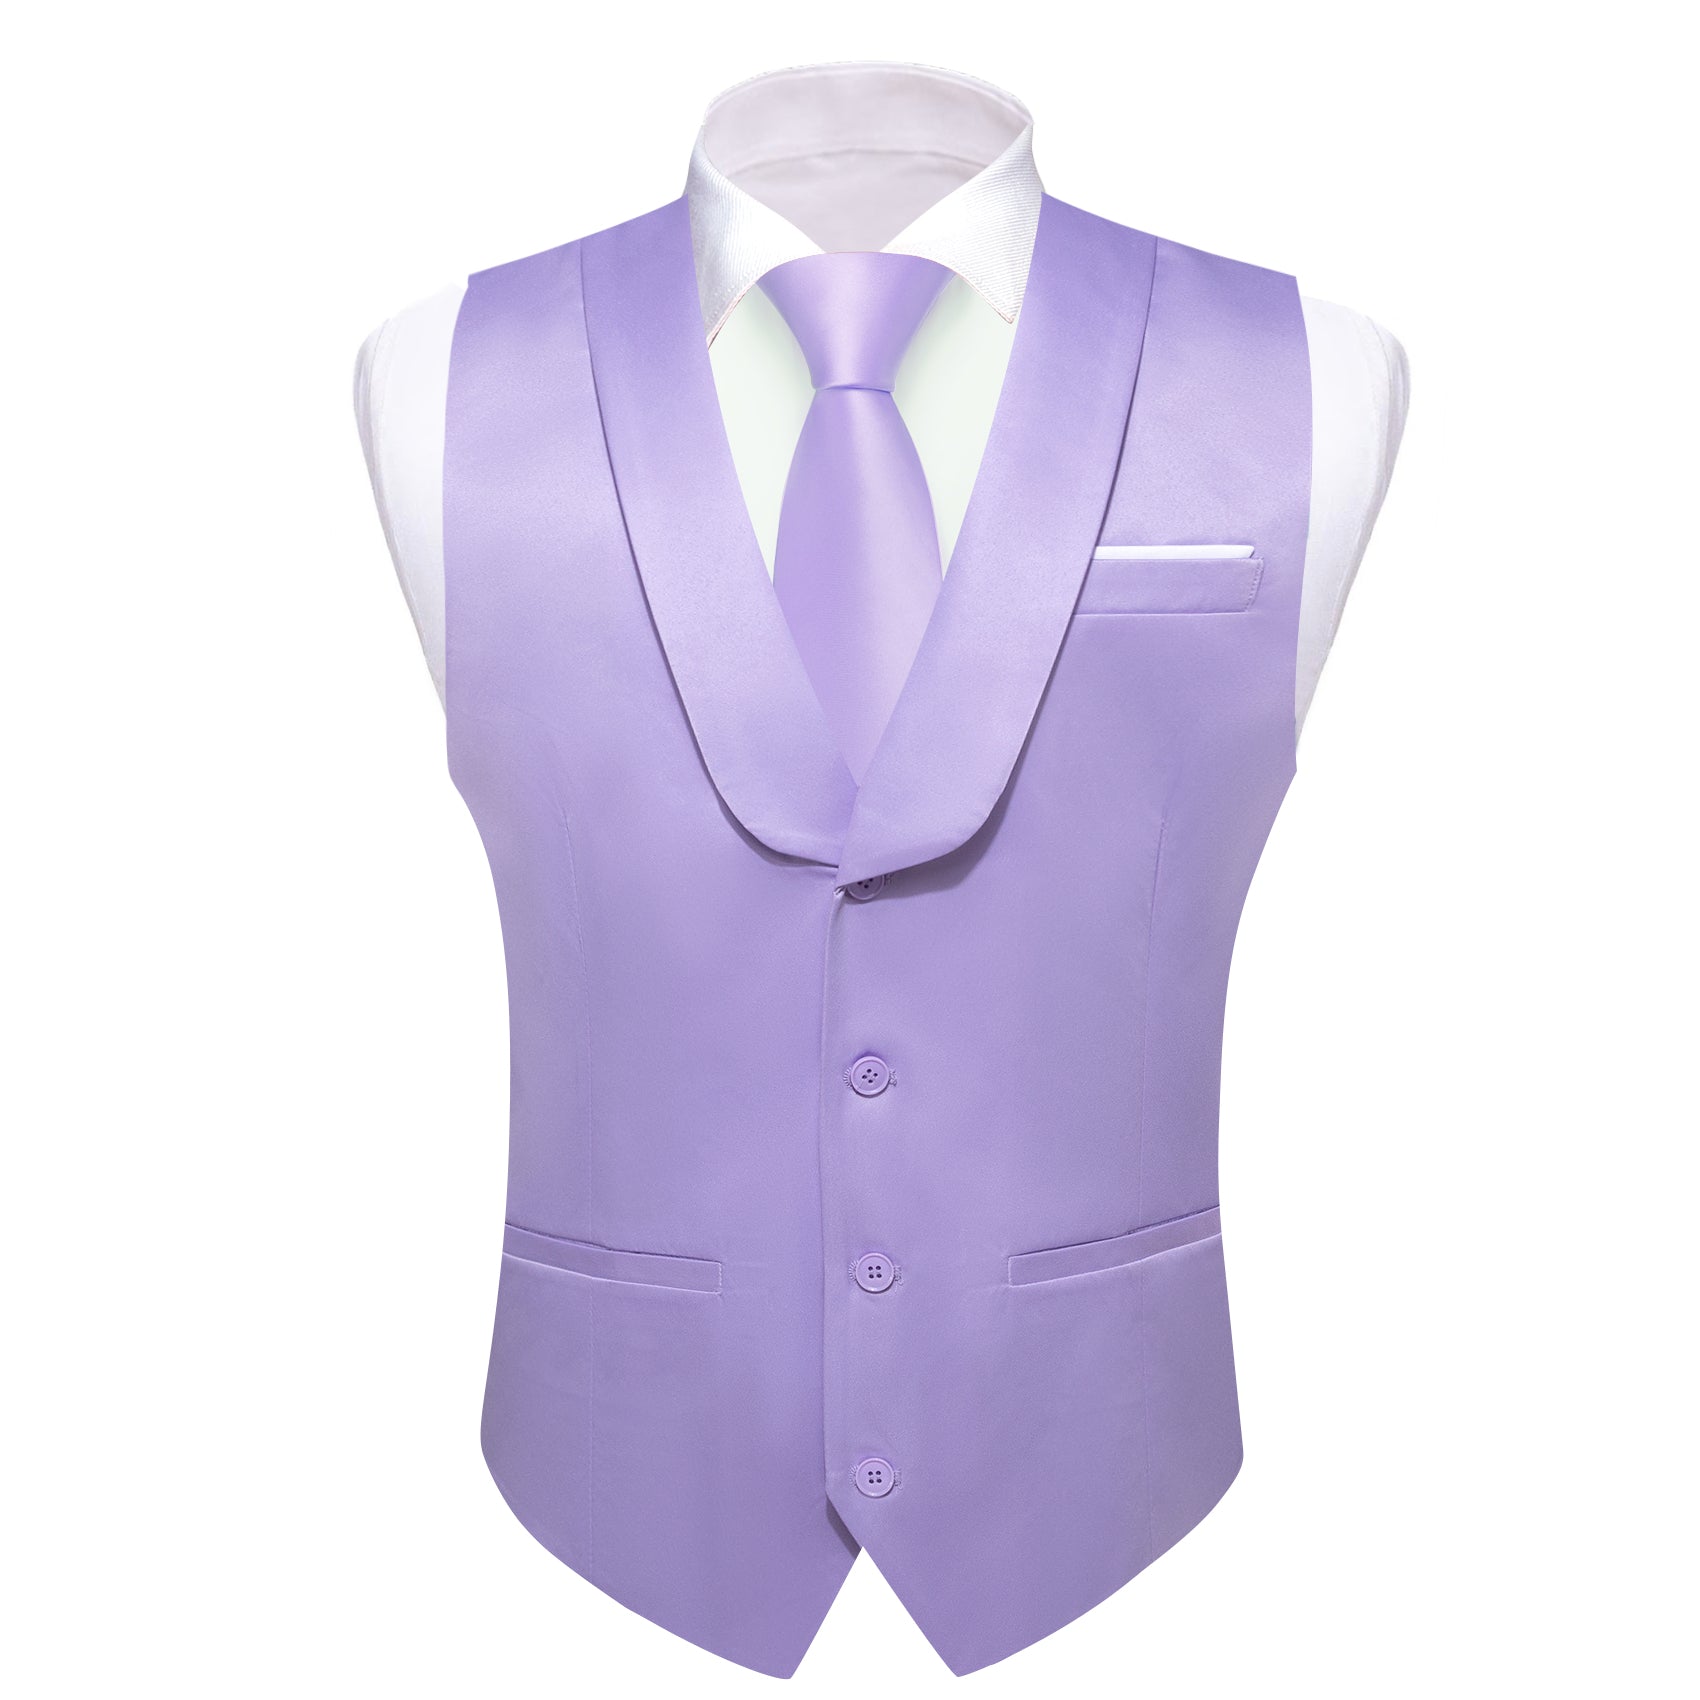 Barry Wang Men's Vest Purple Solid Shawl Collar Silk Vest Waistcoat Set